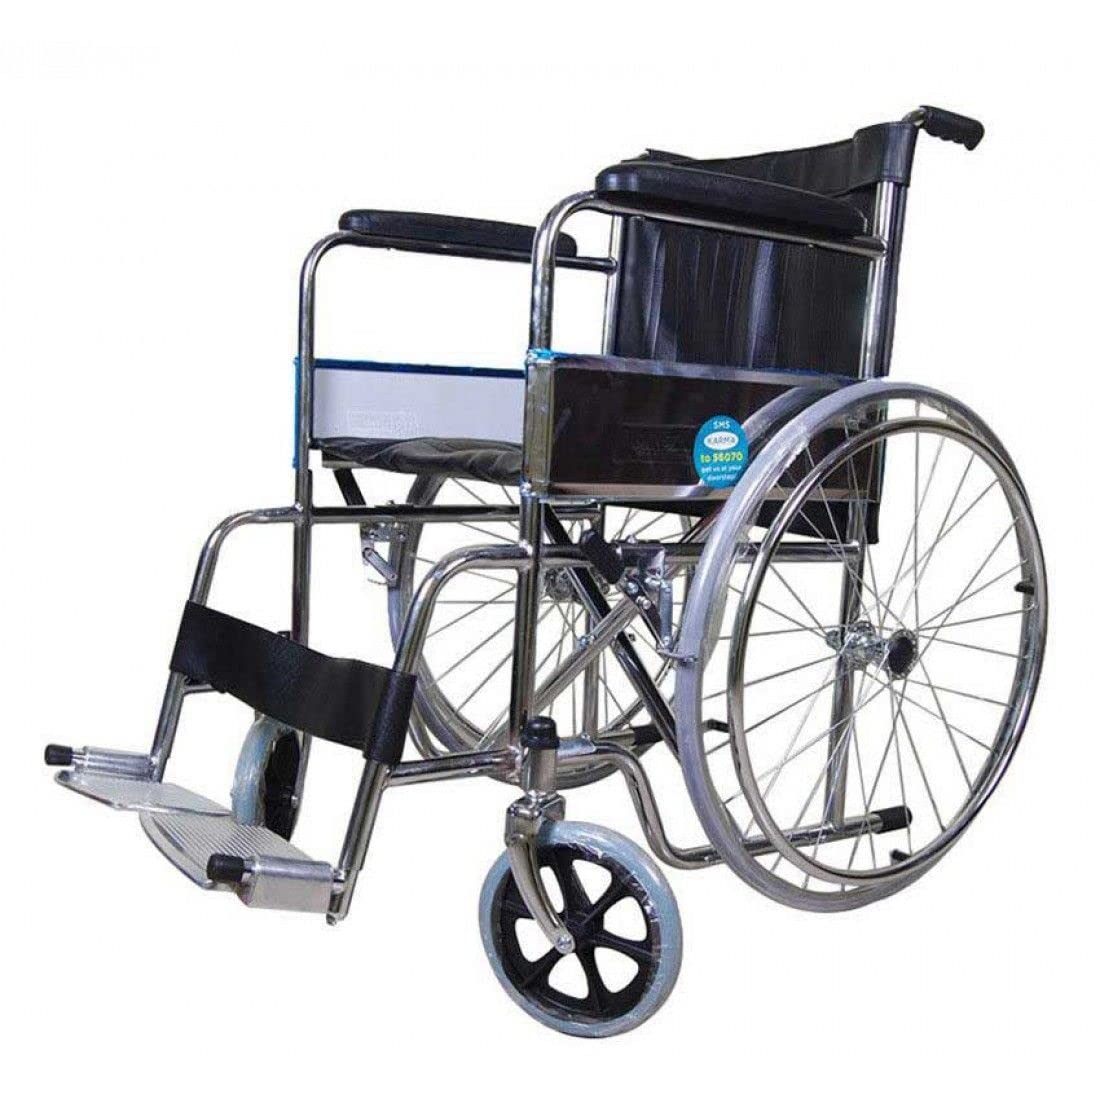 Wheelchair basic model